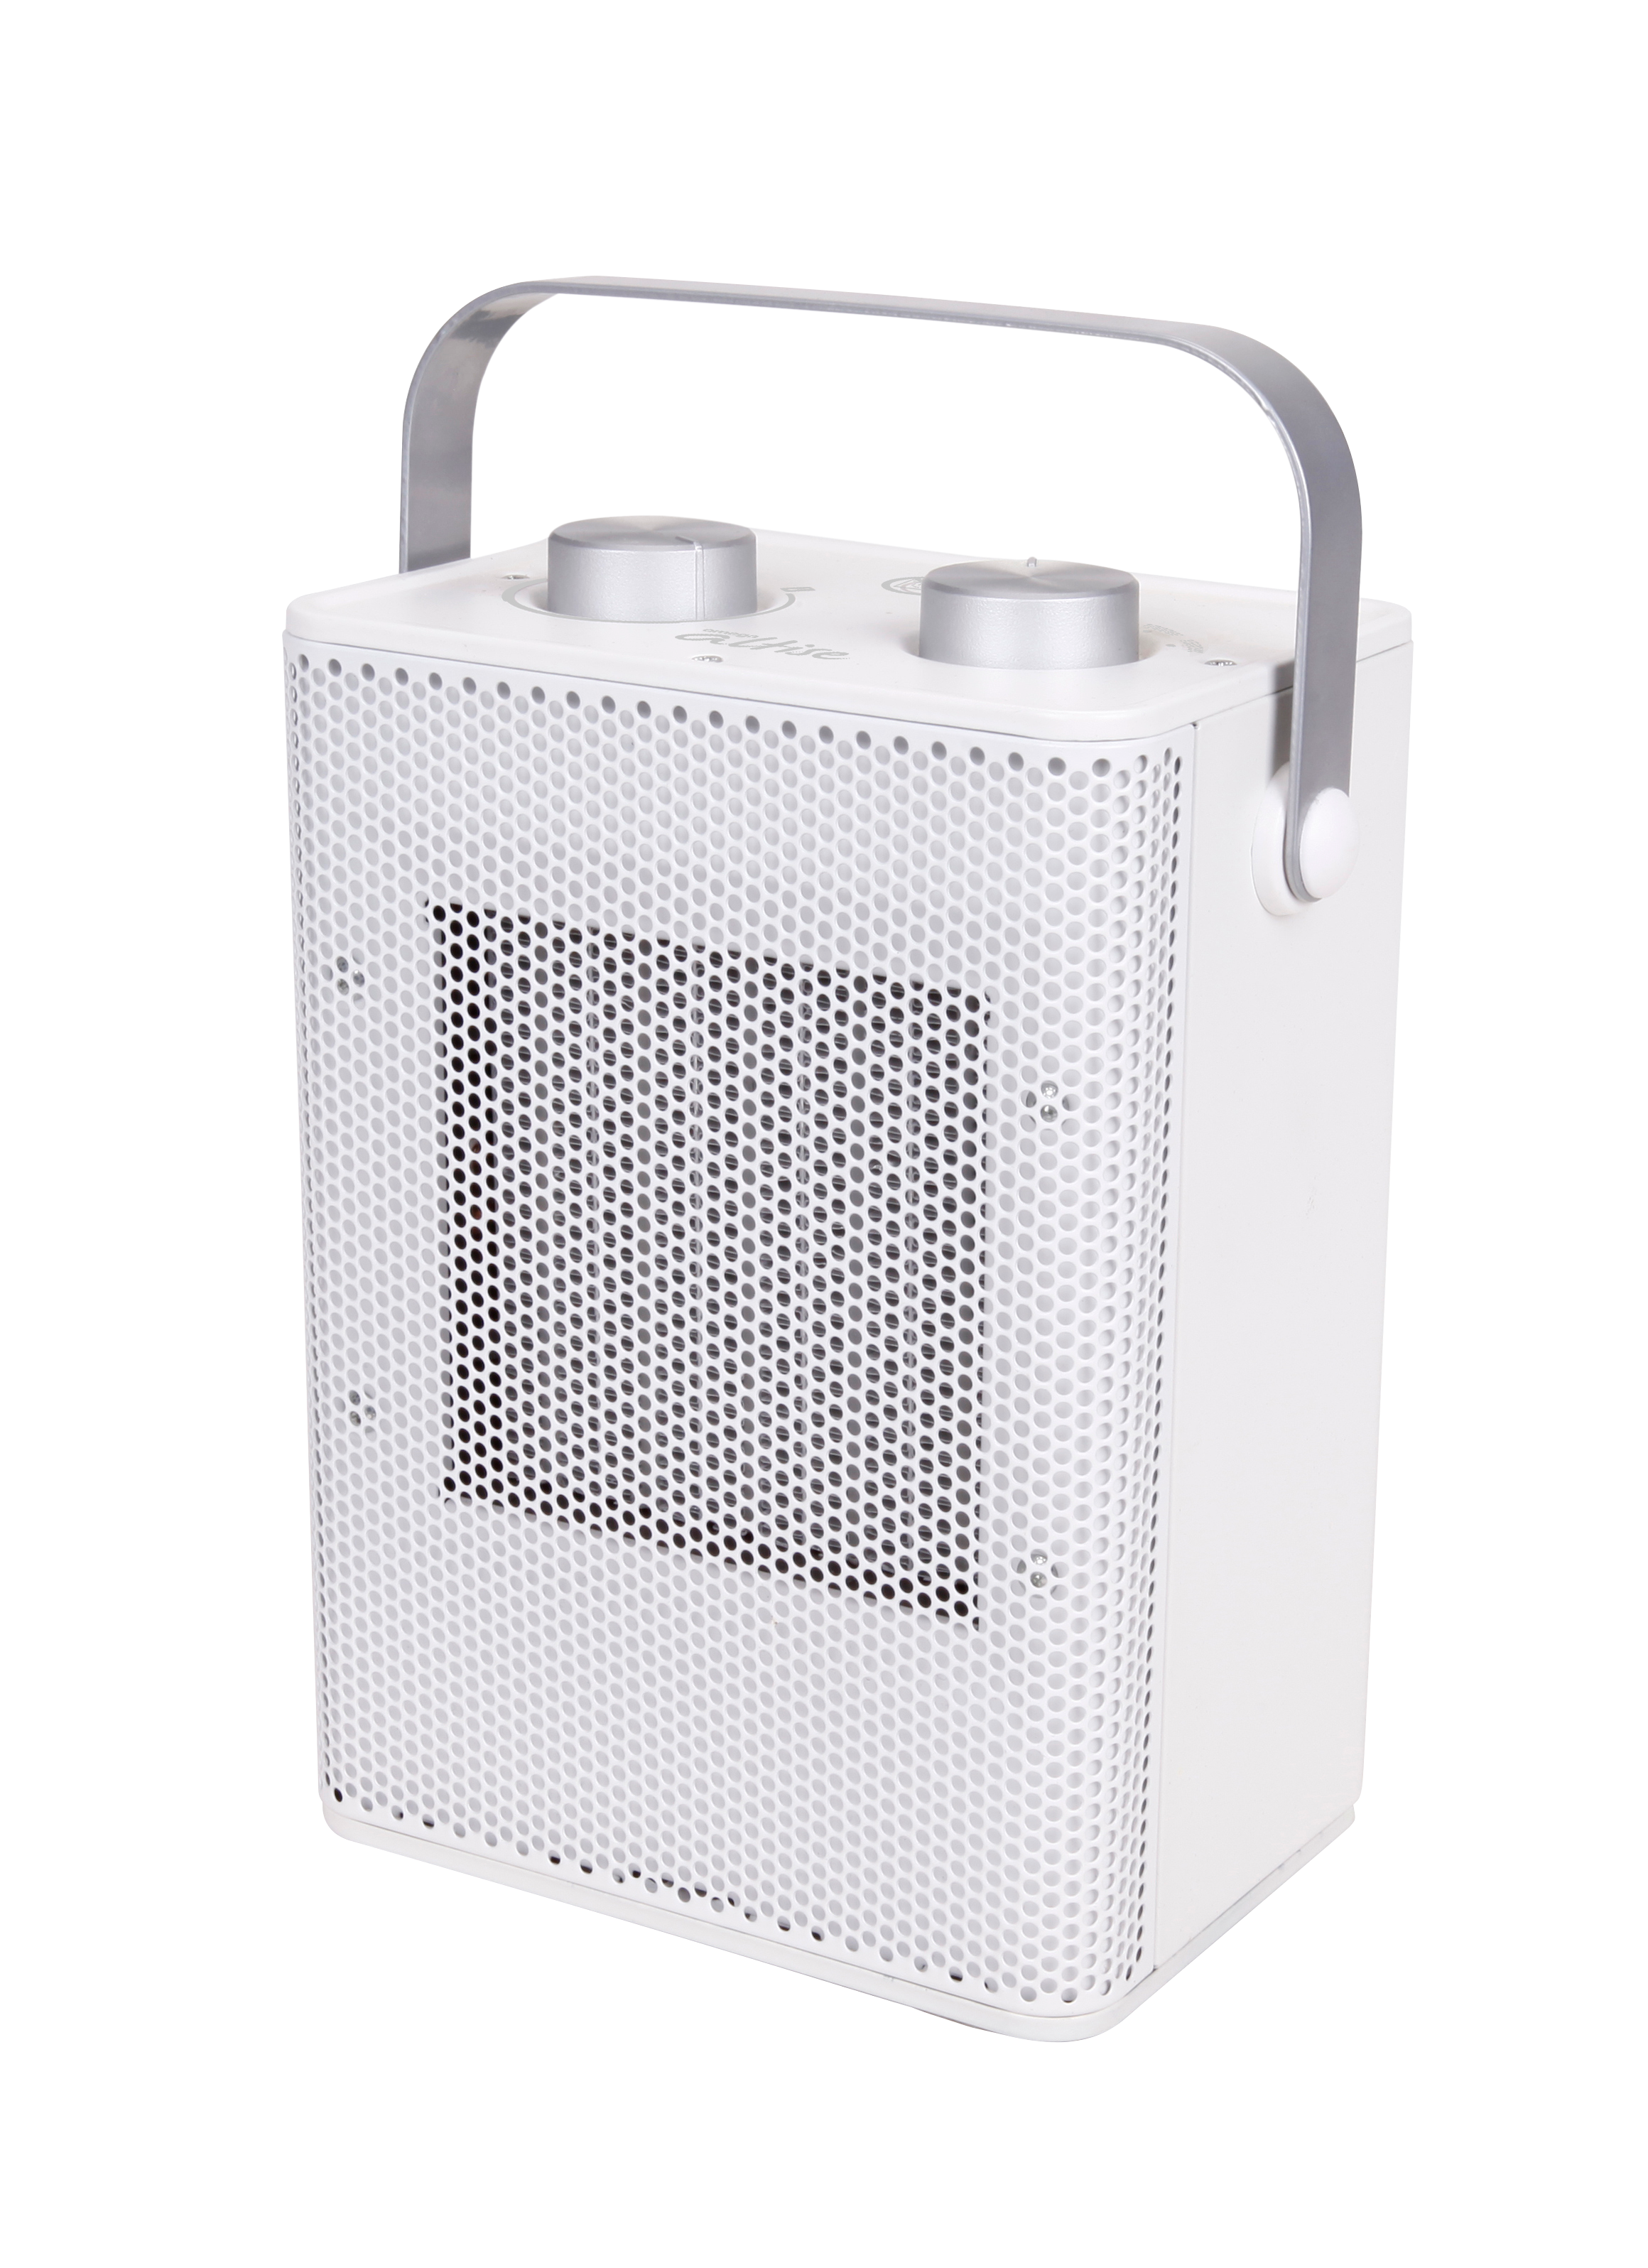 Omega Altise product Portable Ceramic Heater - White OACHM15W